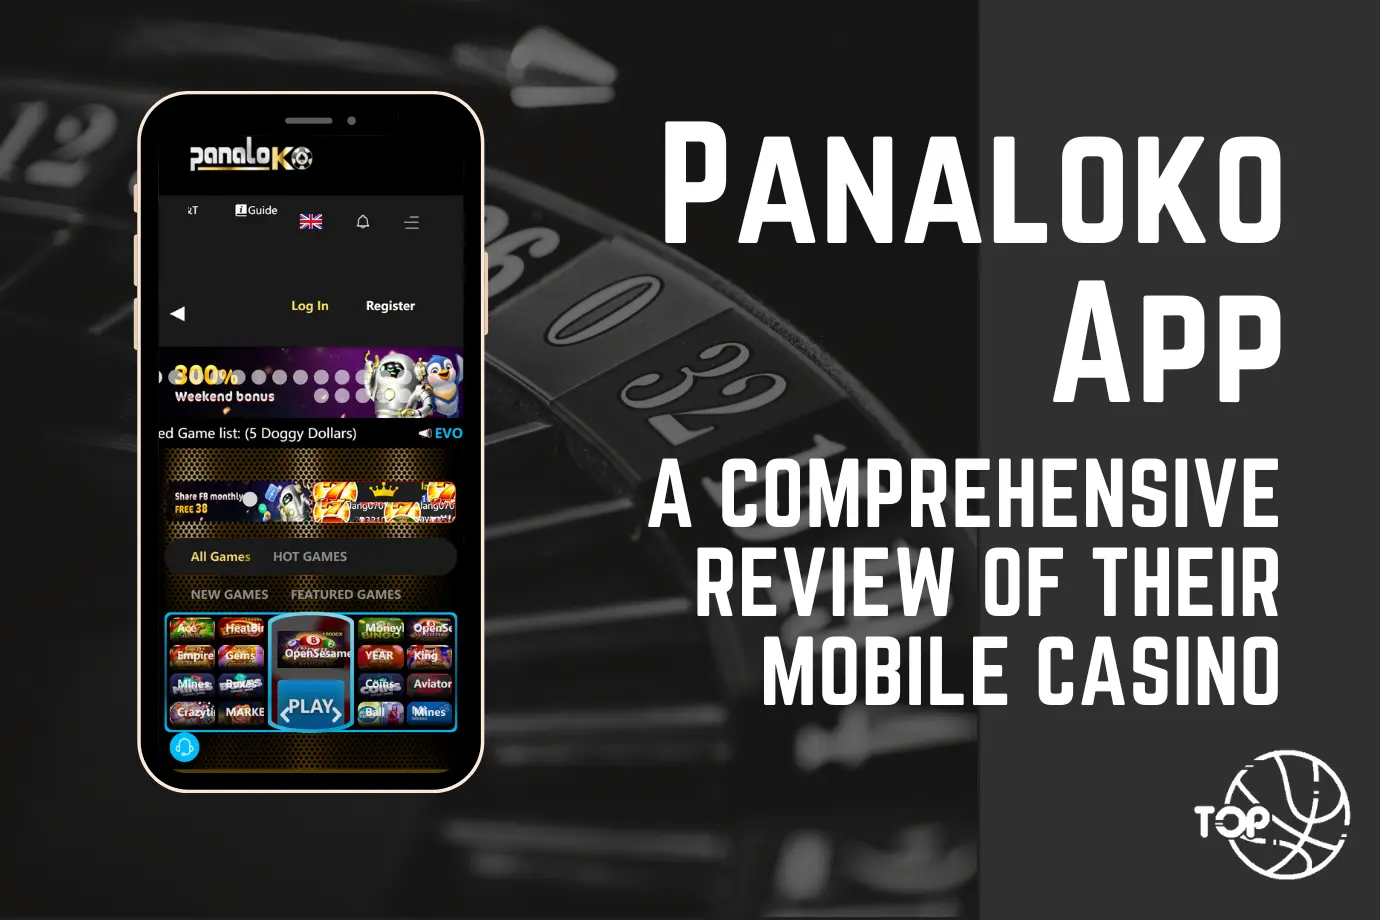 Panaloko App: A Comprehensive Review of Their Mobile Casino